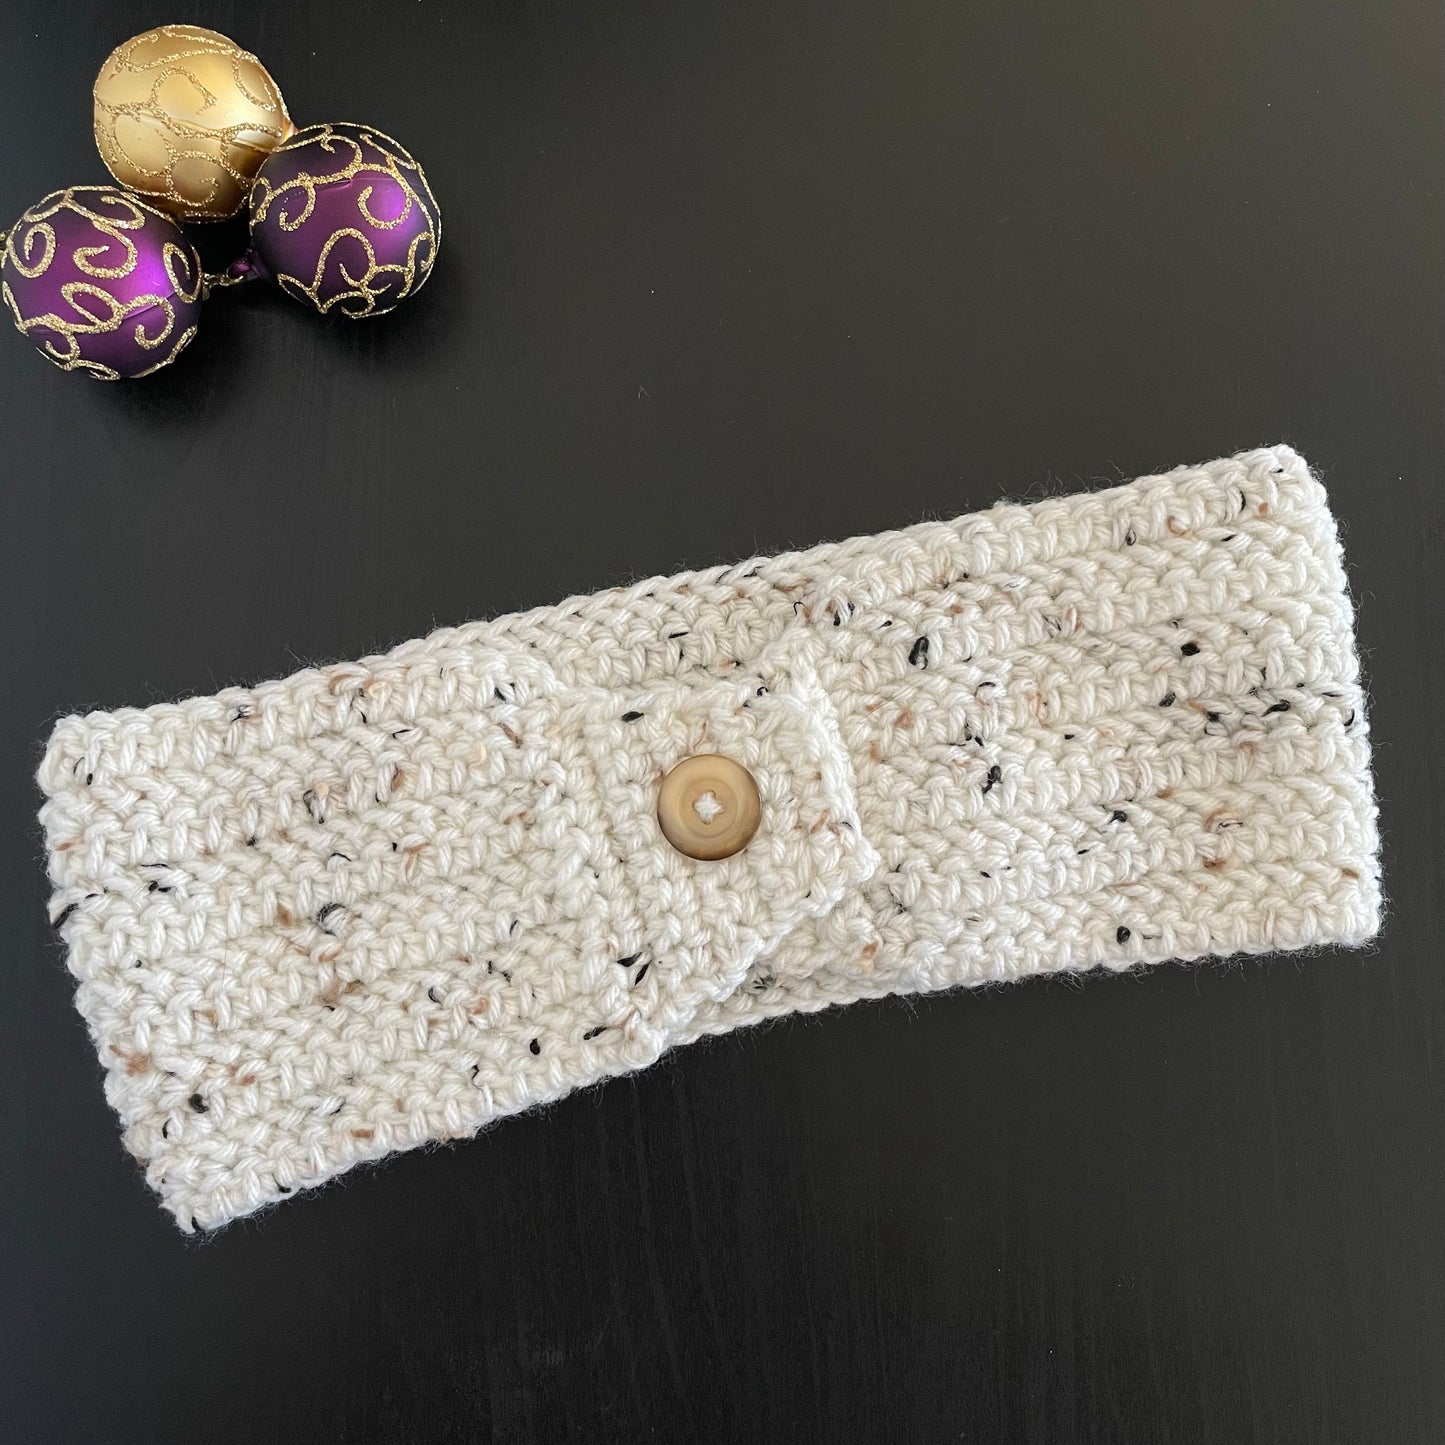 Speckled Cream Tweed & Tan Button Ear Warmer Headband Crochet Knit Hand Crafted Outdoor Fall Winter Hiking Running